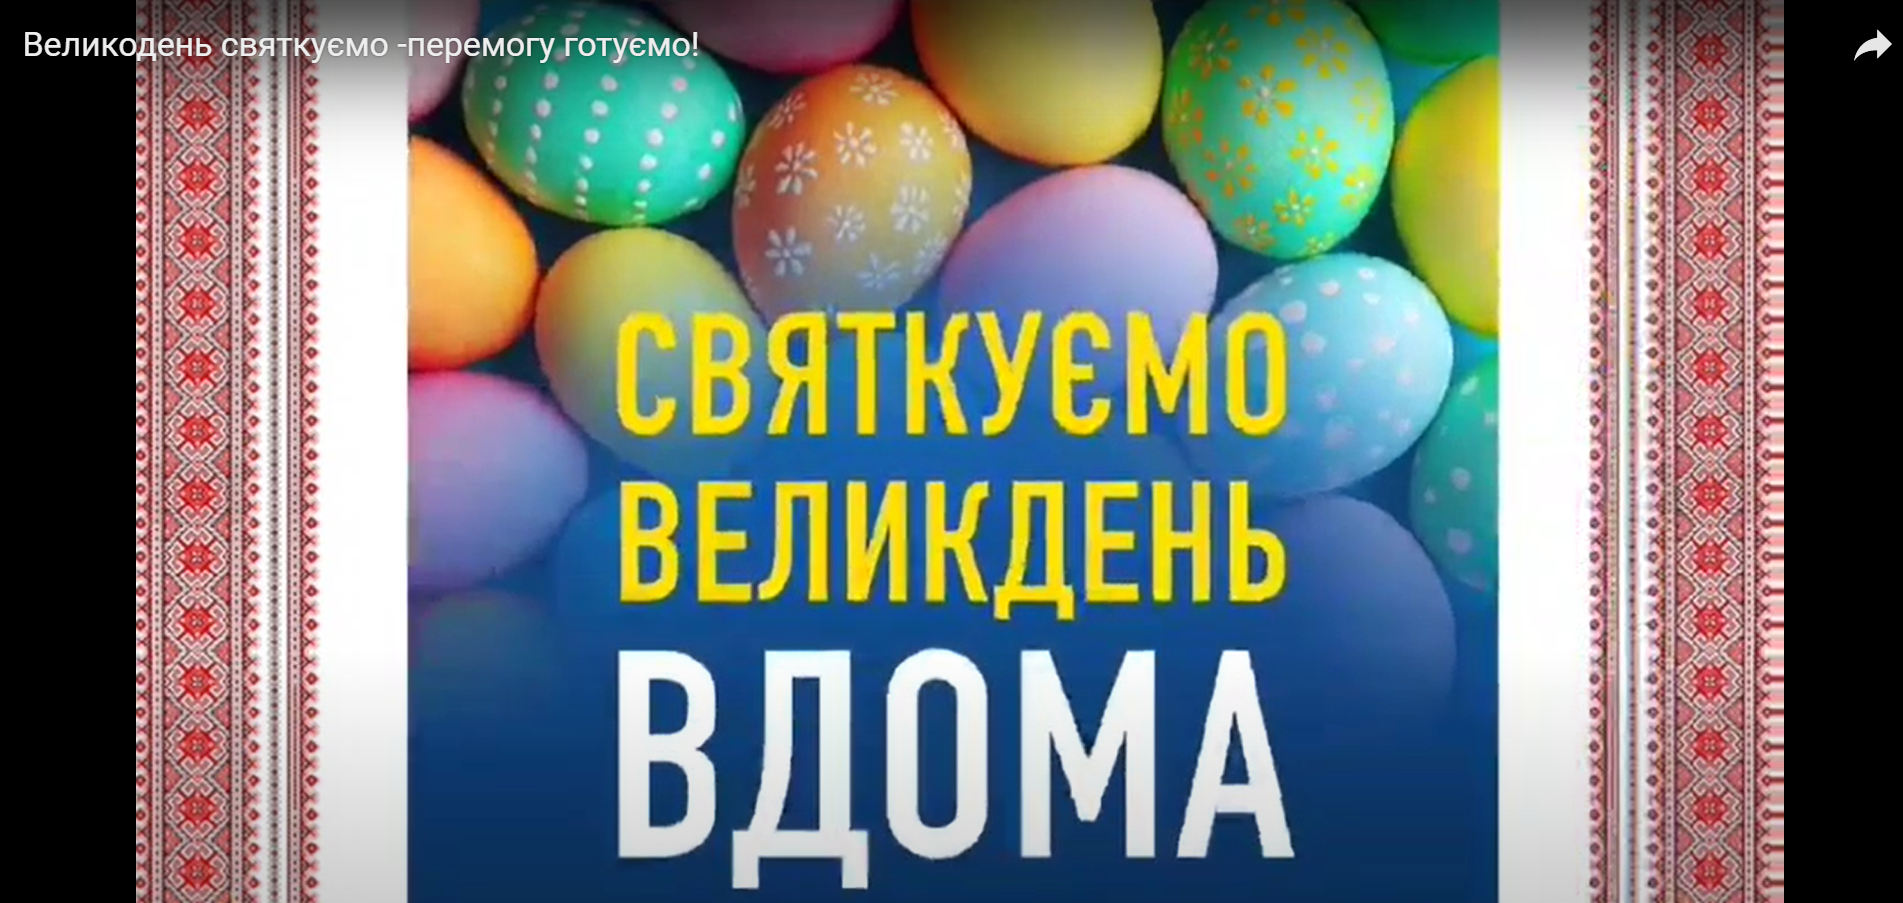 Happy Easter from Donetsk region!